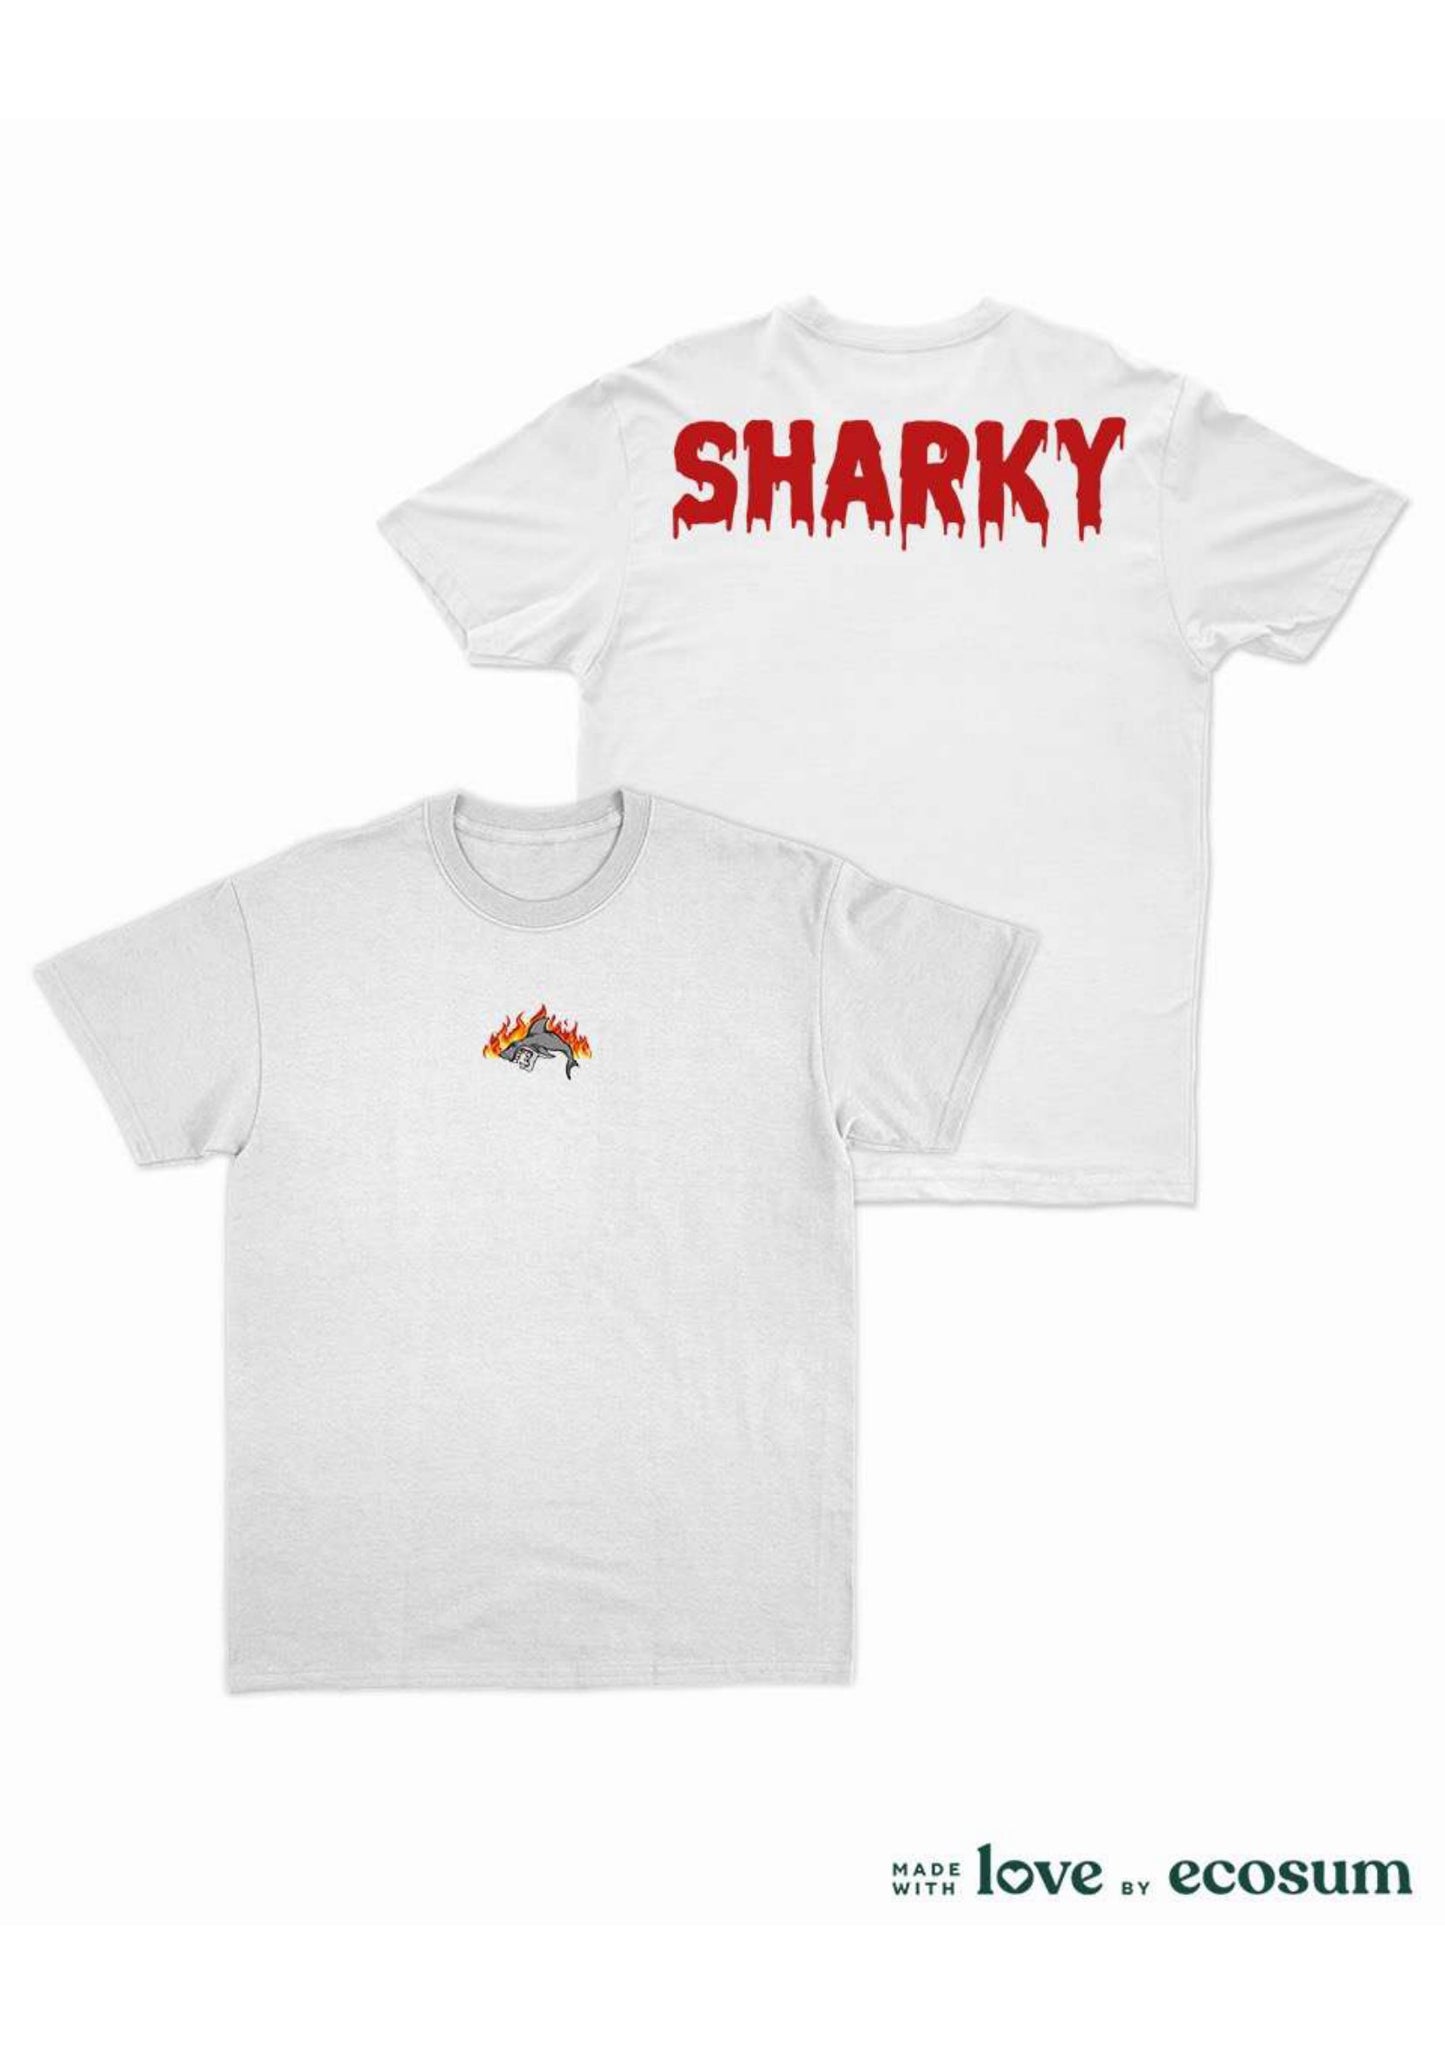 T-shirt Sharky - front&back